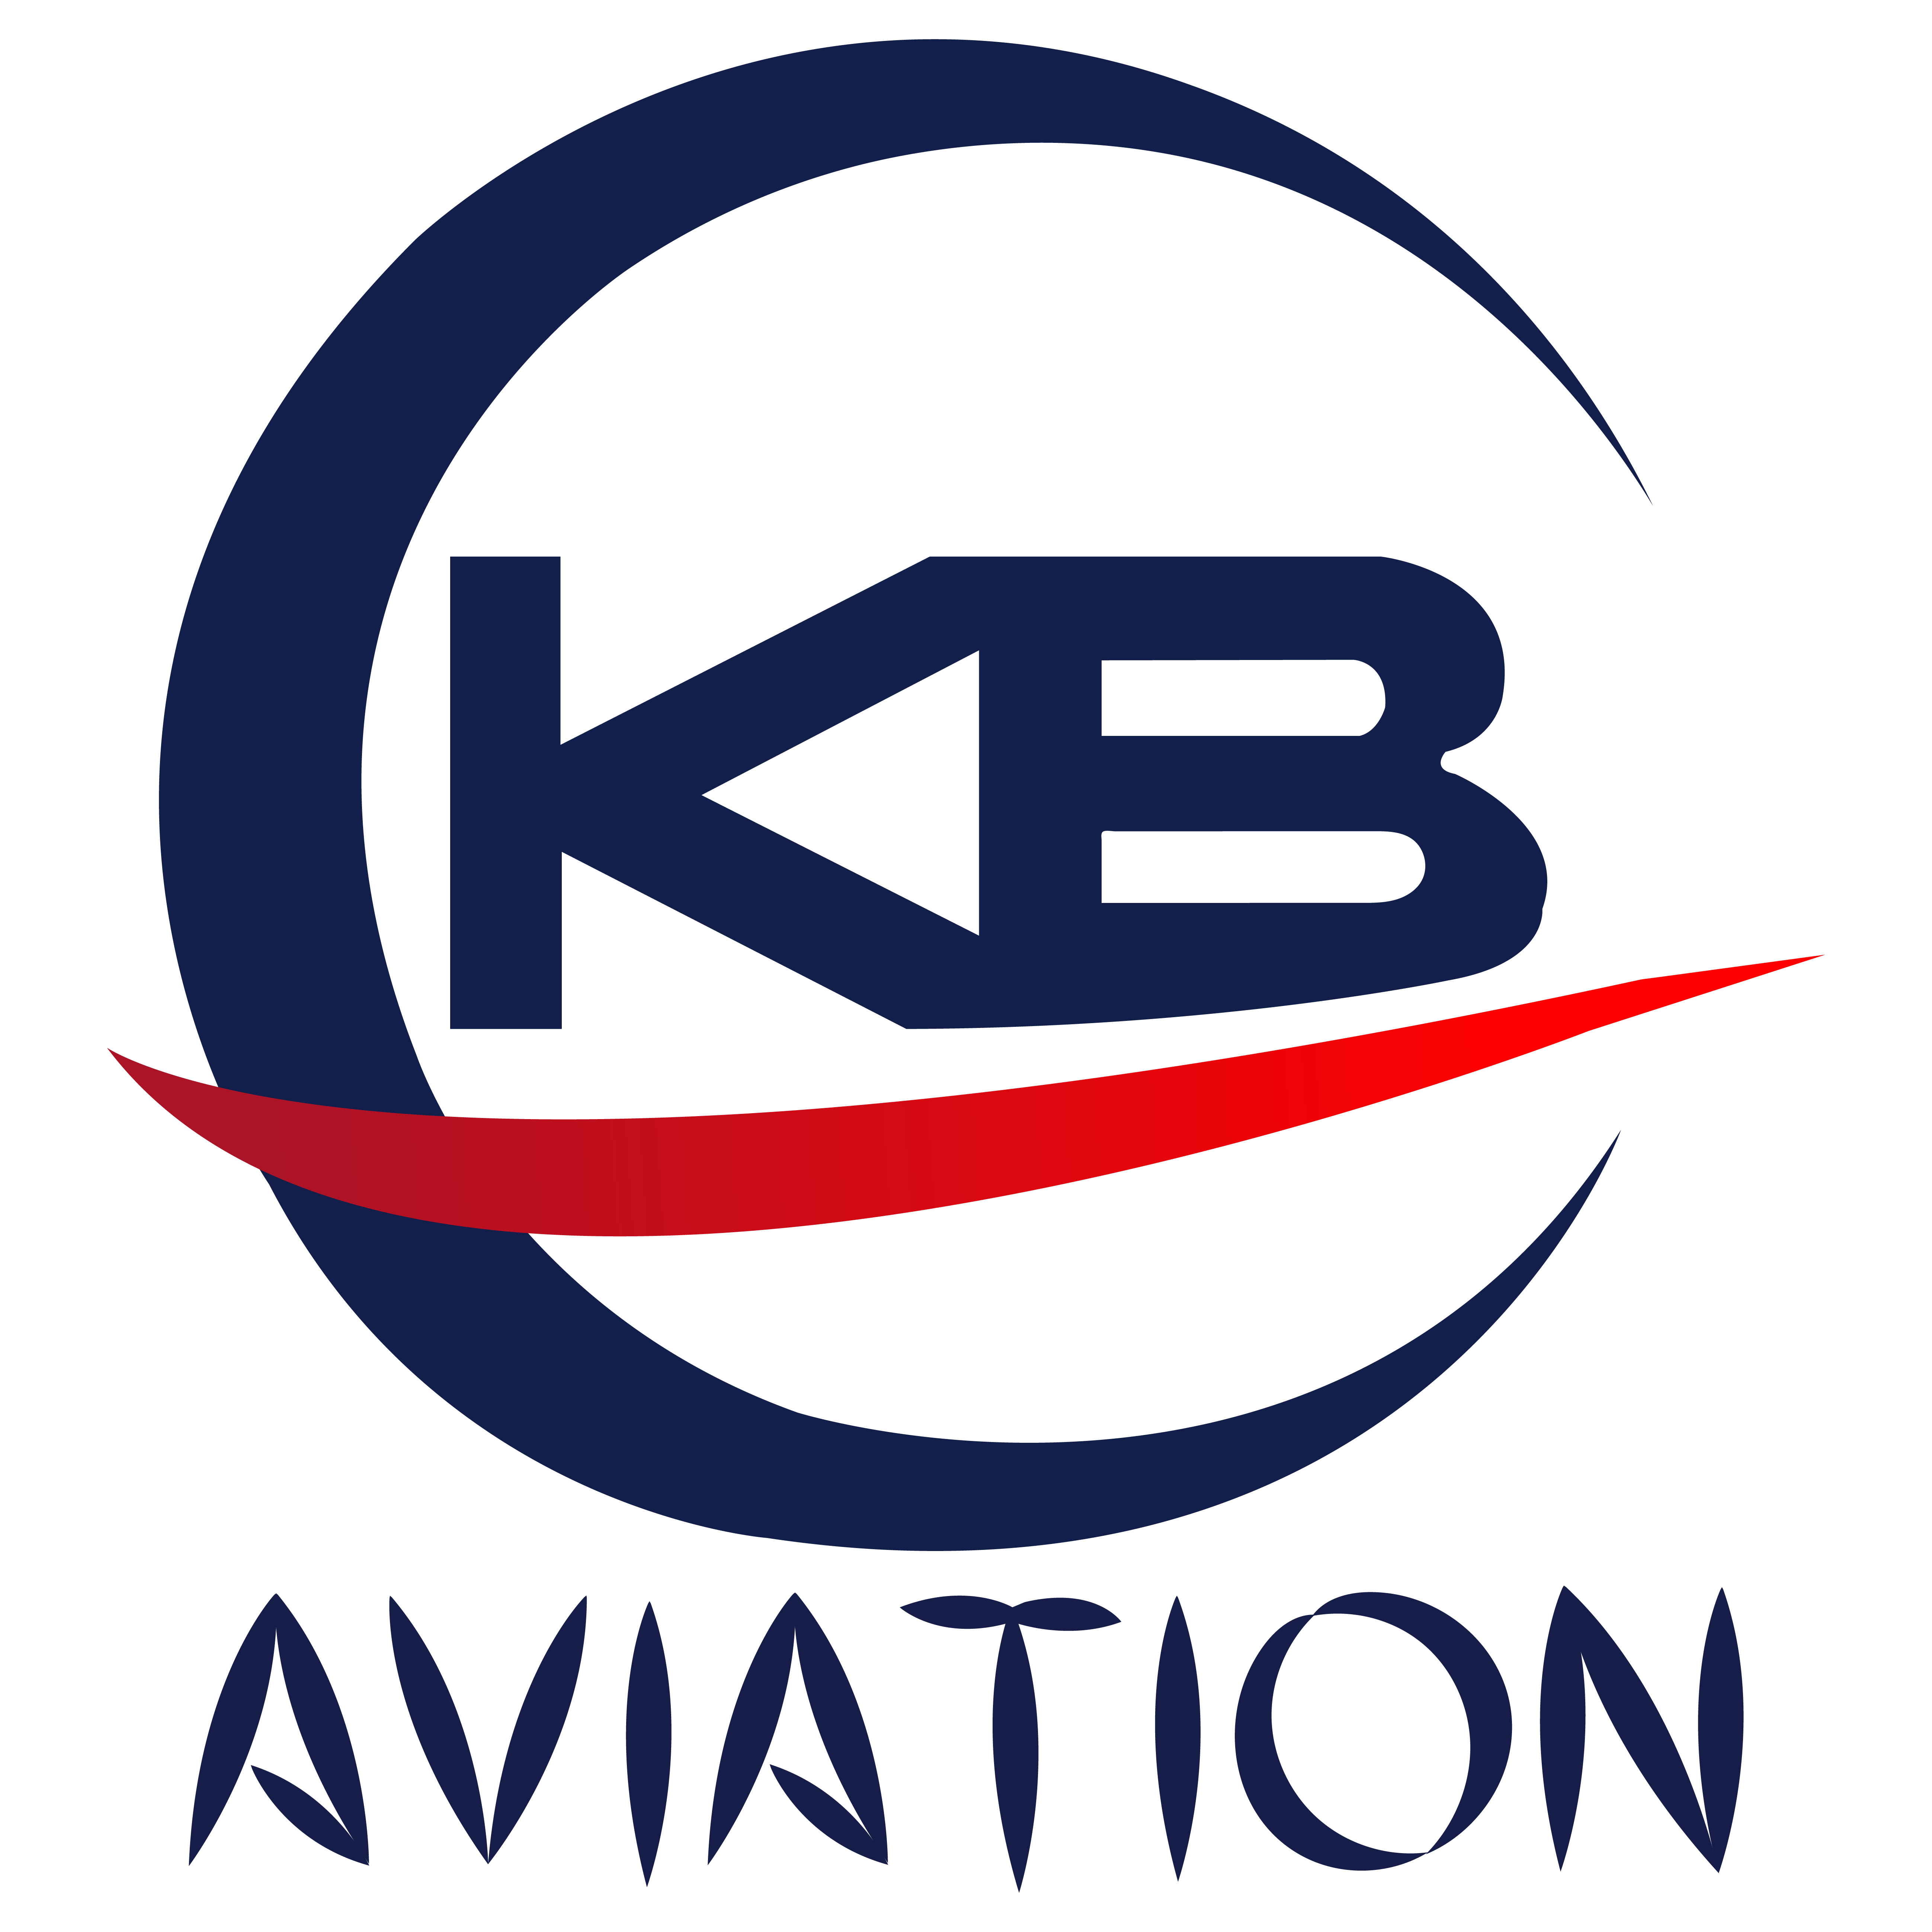 File:KB logo.svg - Wikimedia Commons